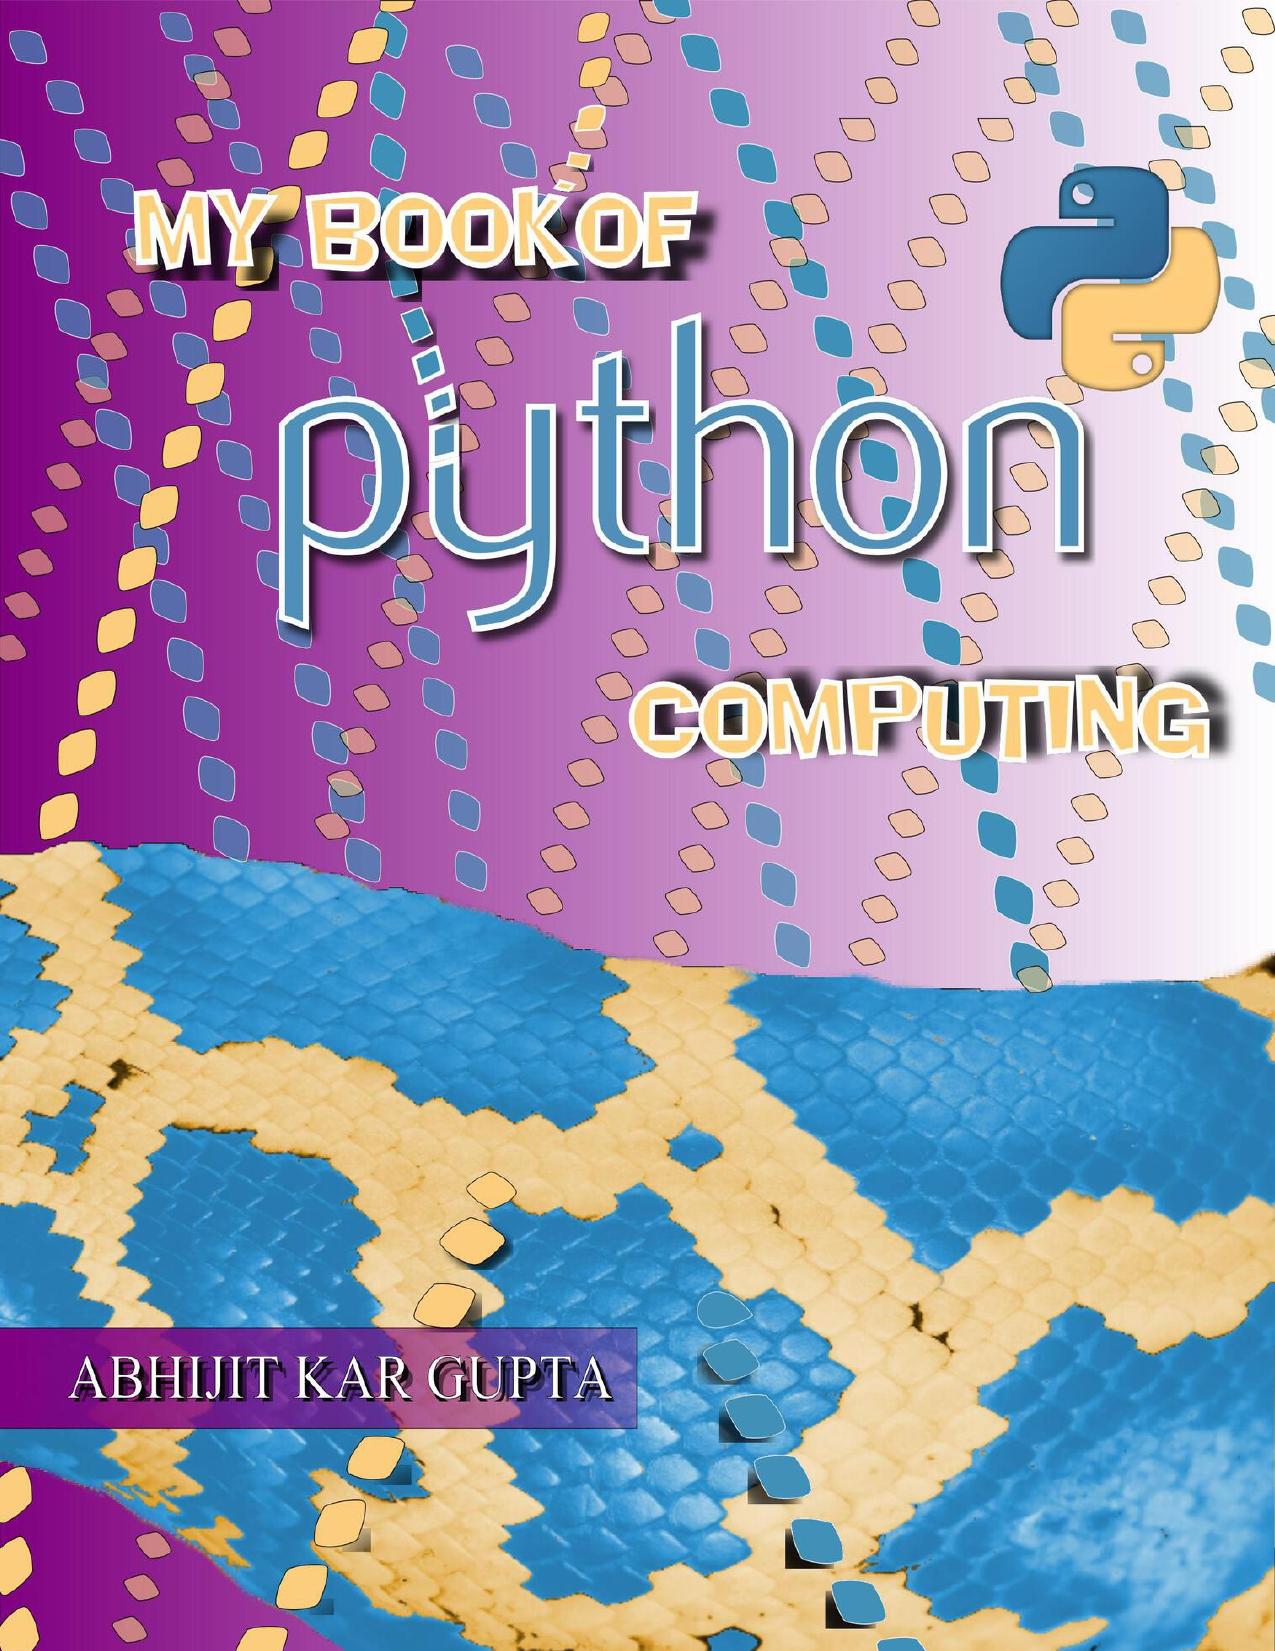 My Book of Python Computing